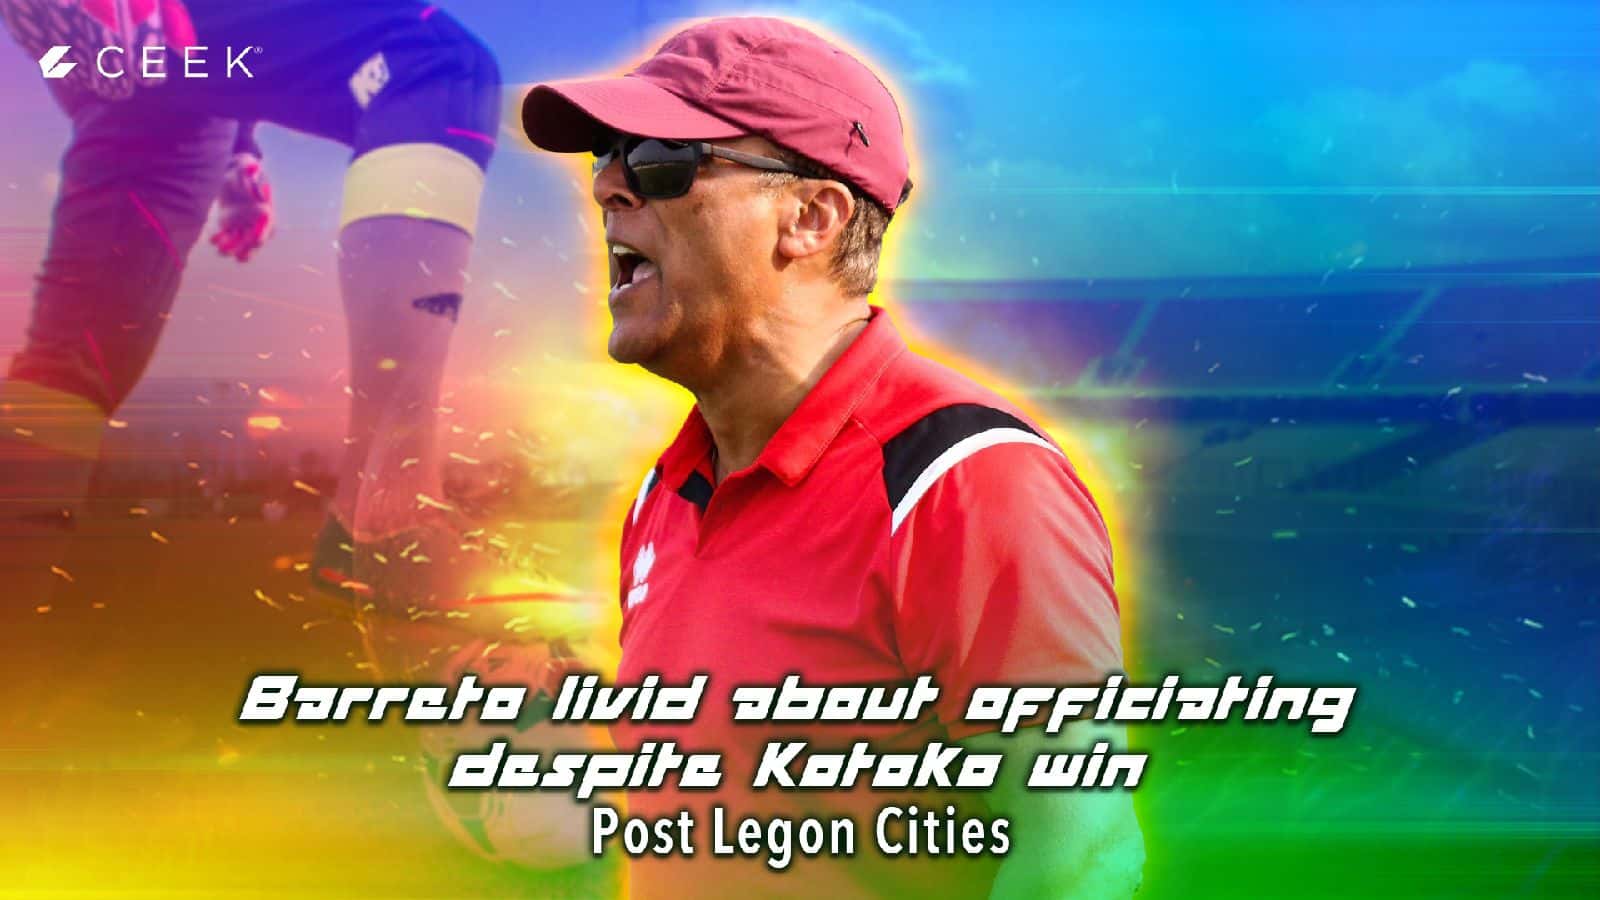 Barreto livid about officiating despite Kotoko win | Post Legon Cities